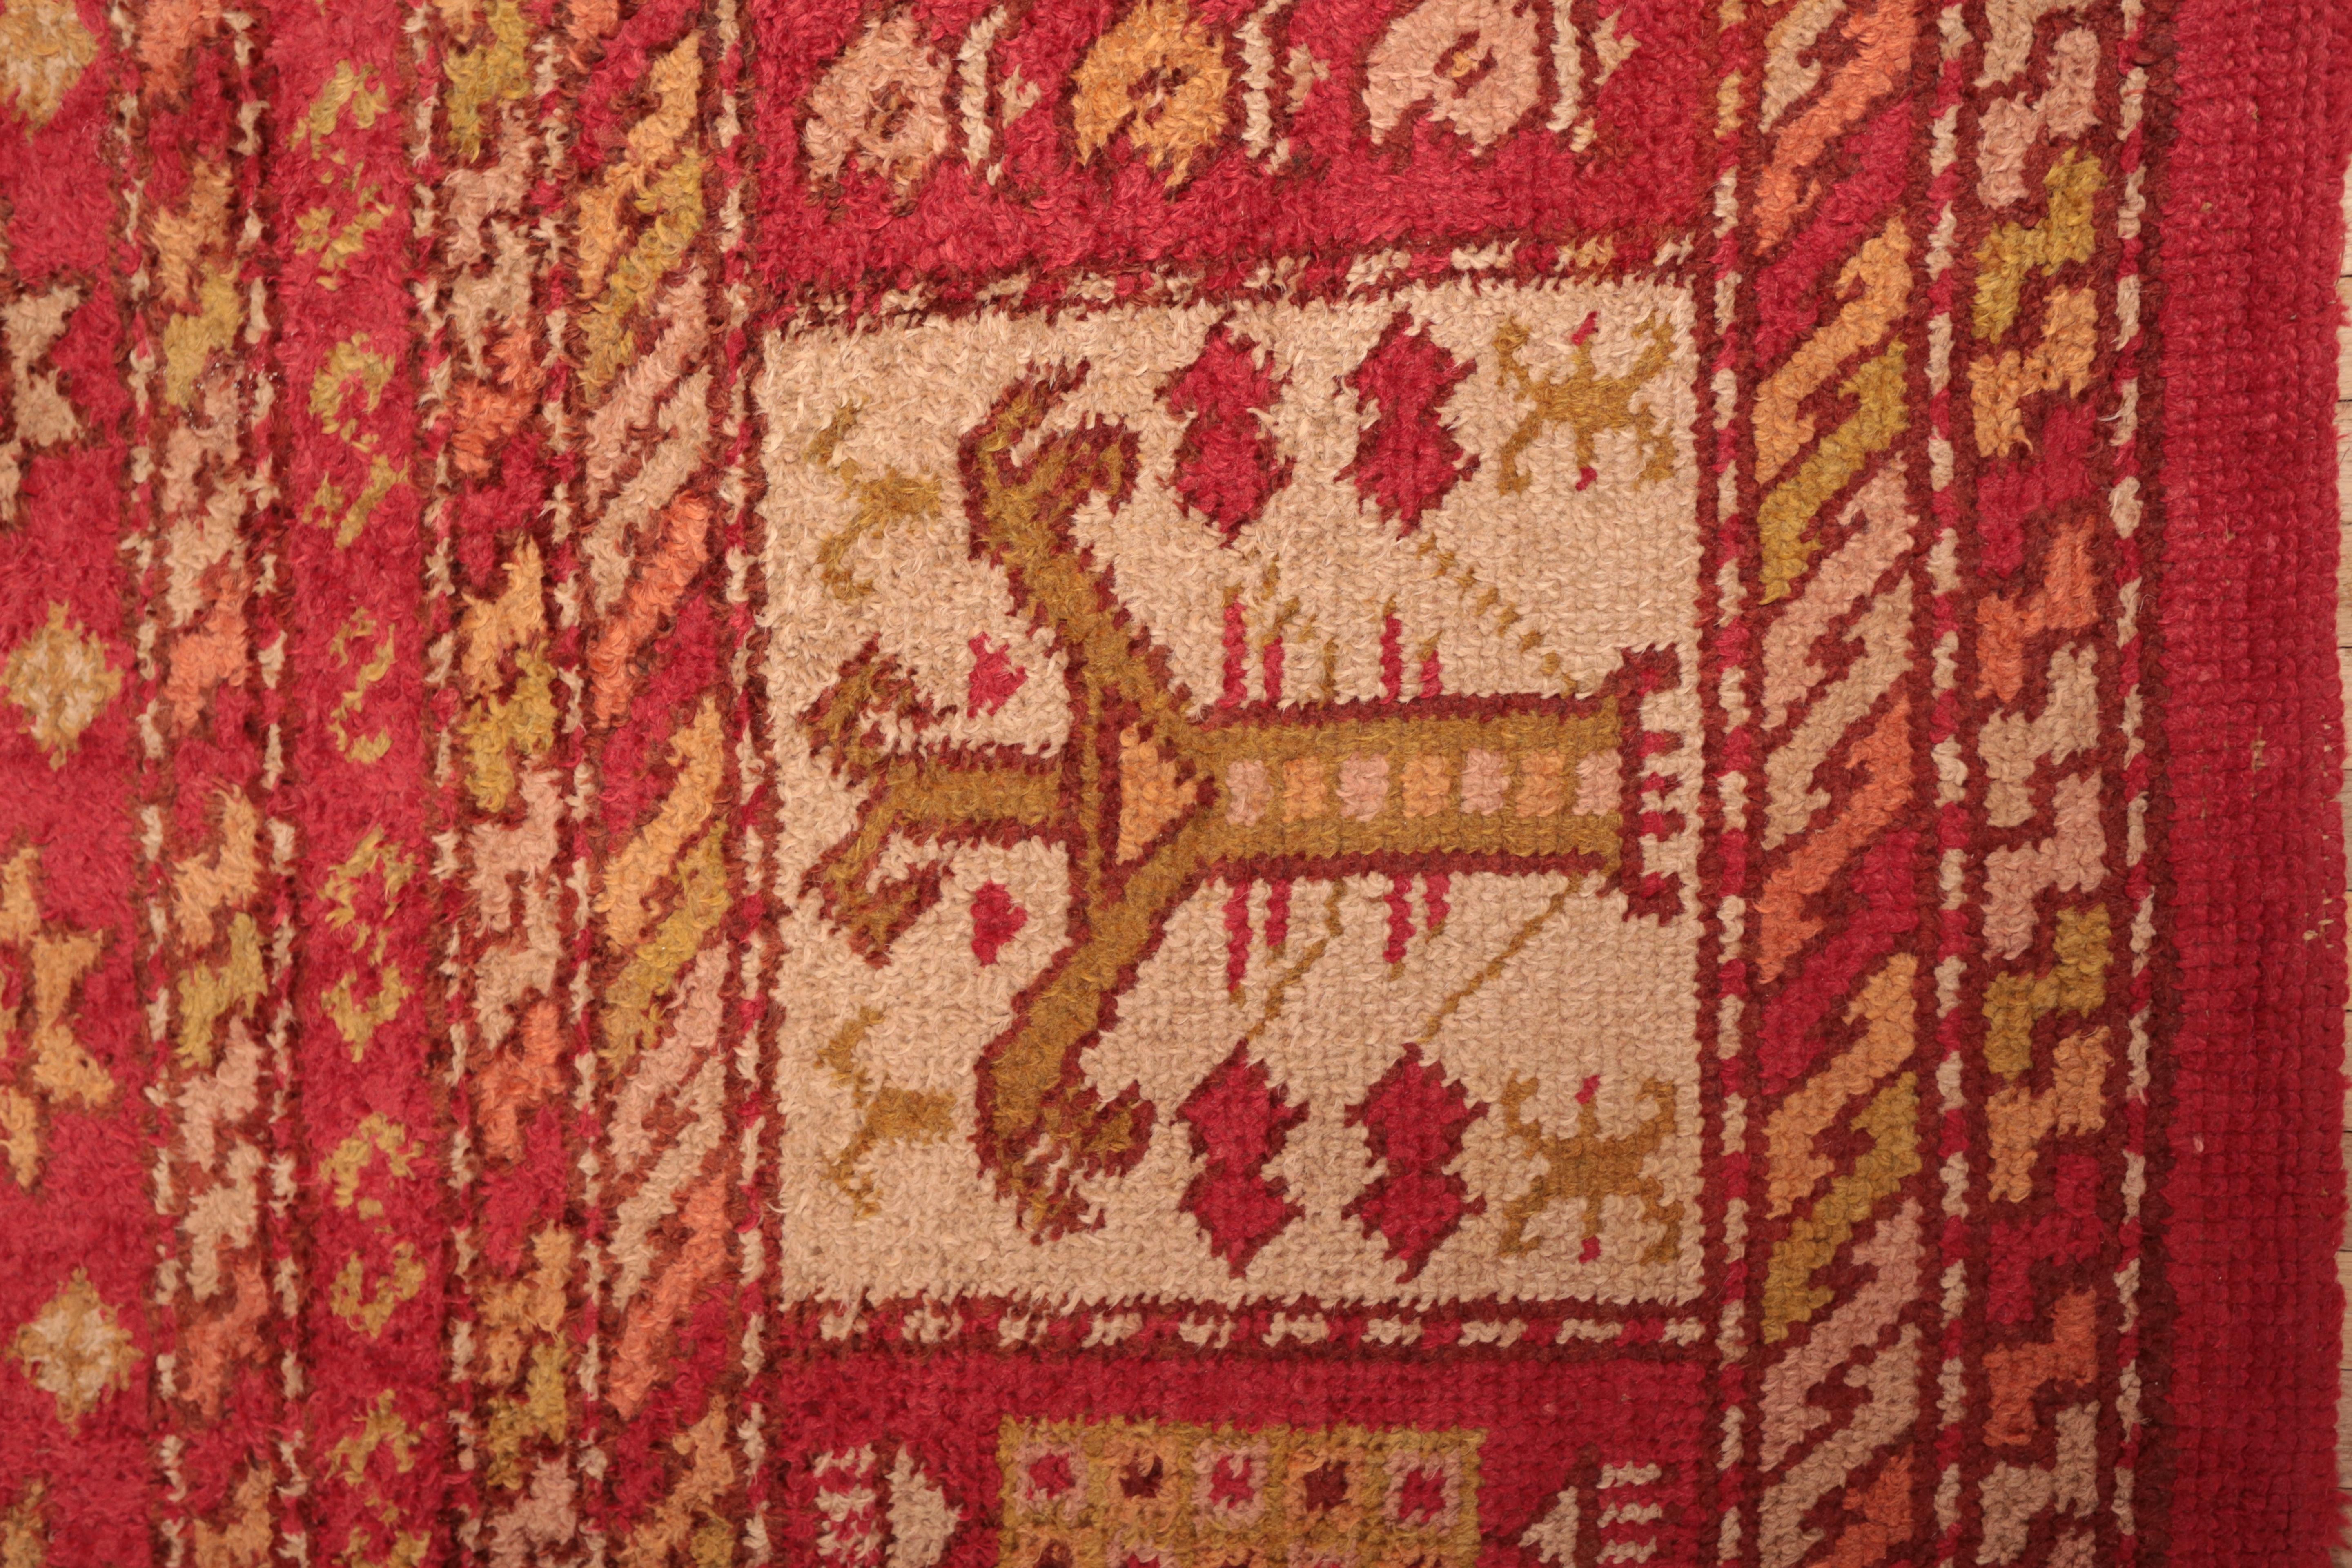 Wool Antique Palace Turkish Ushak Carpet 555 X 375 cm For Sale